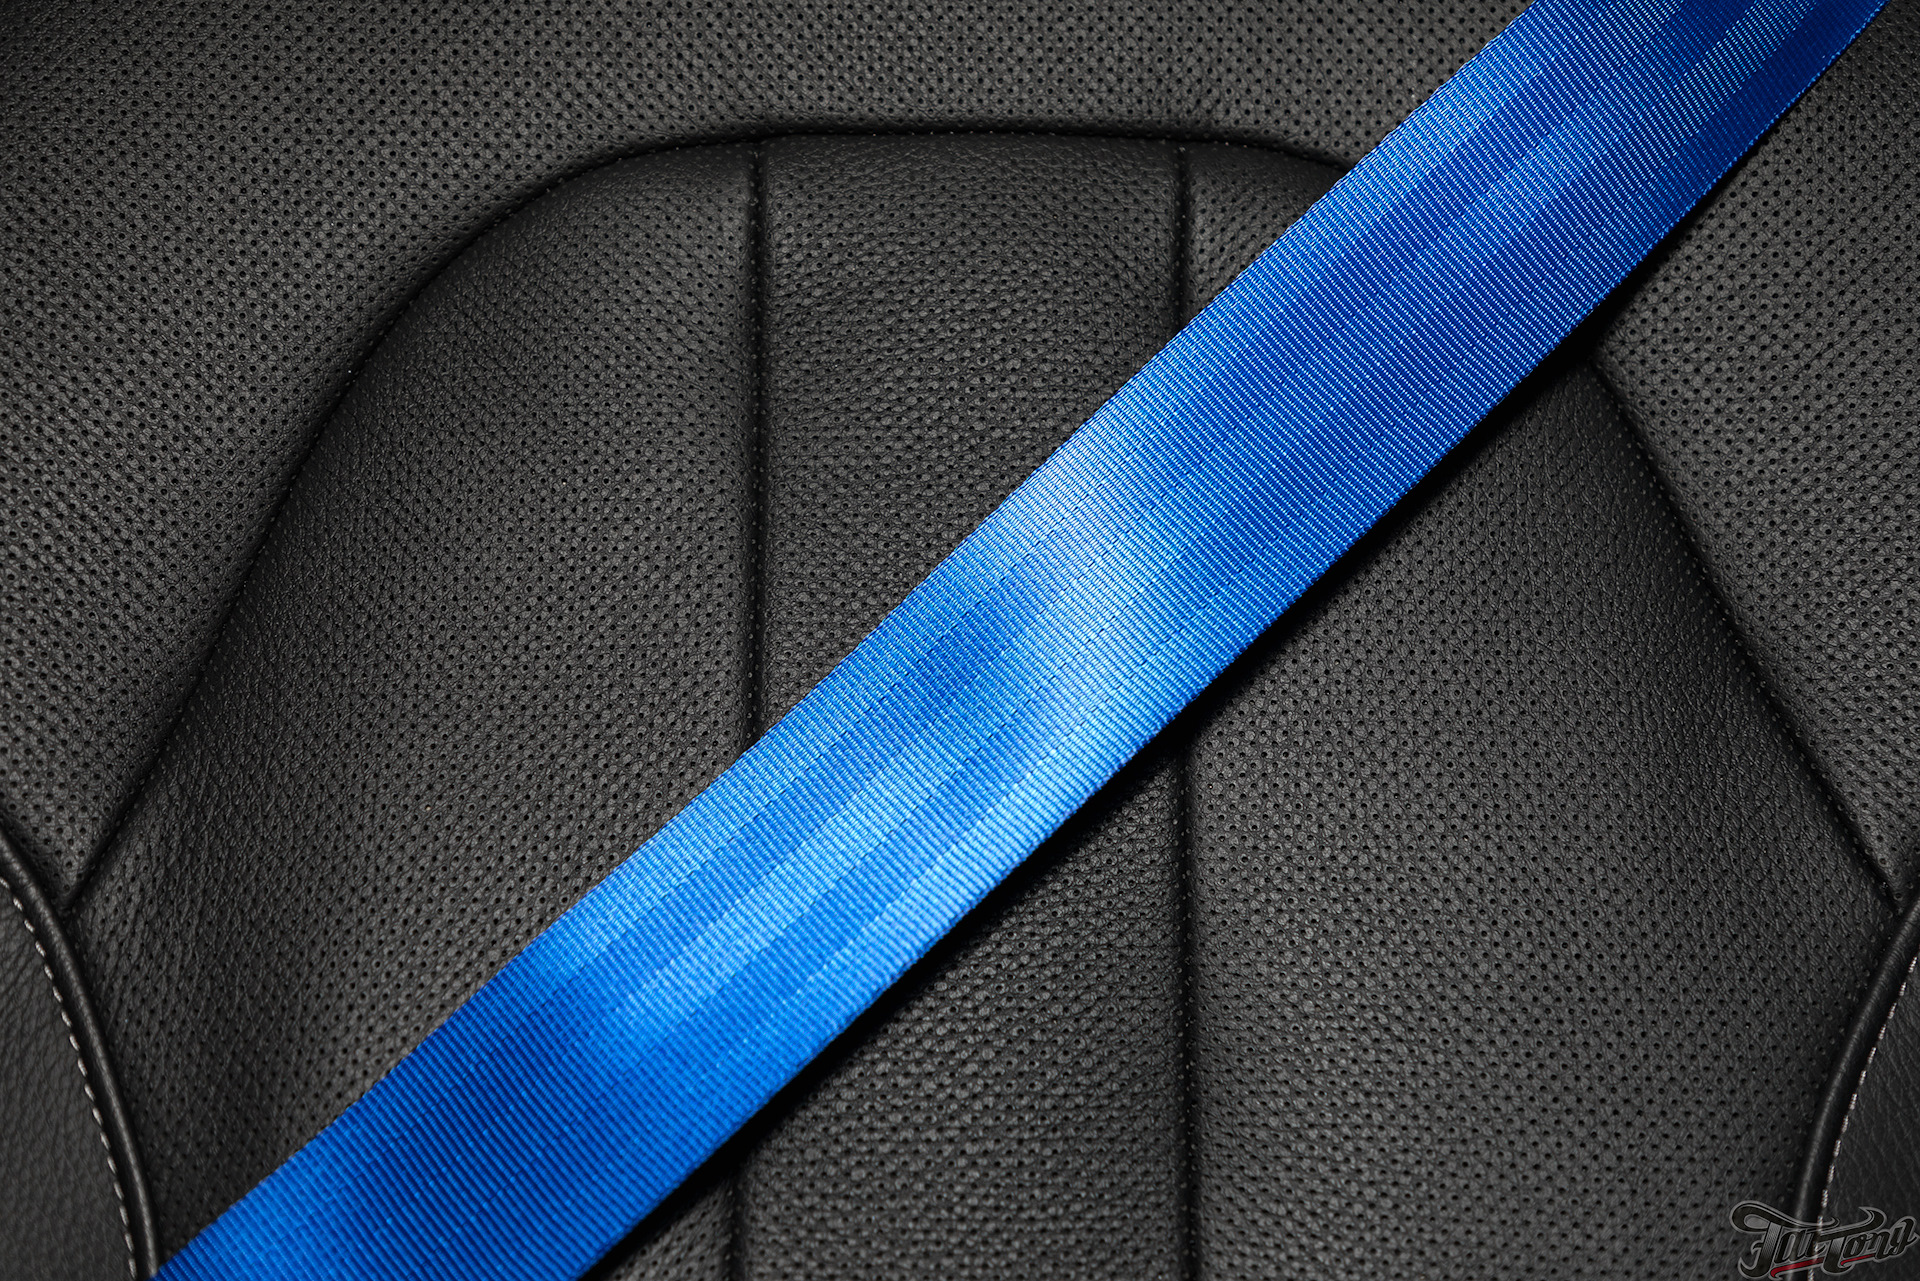 Ремень безопасности бмв. Ремни безопасности BMW m3. Синие ремни безопасности. Цветные ремни безопасности. Синие ремни безопасности в авто.